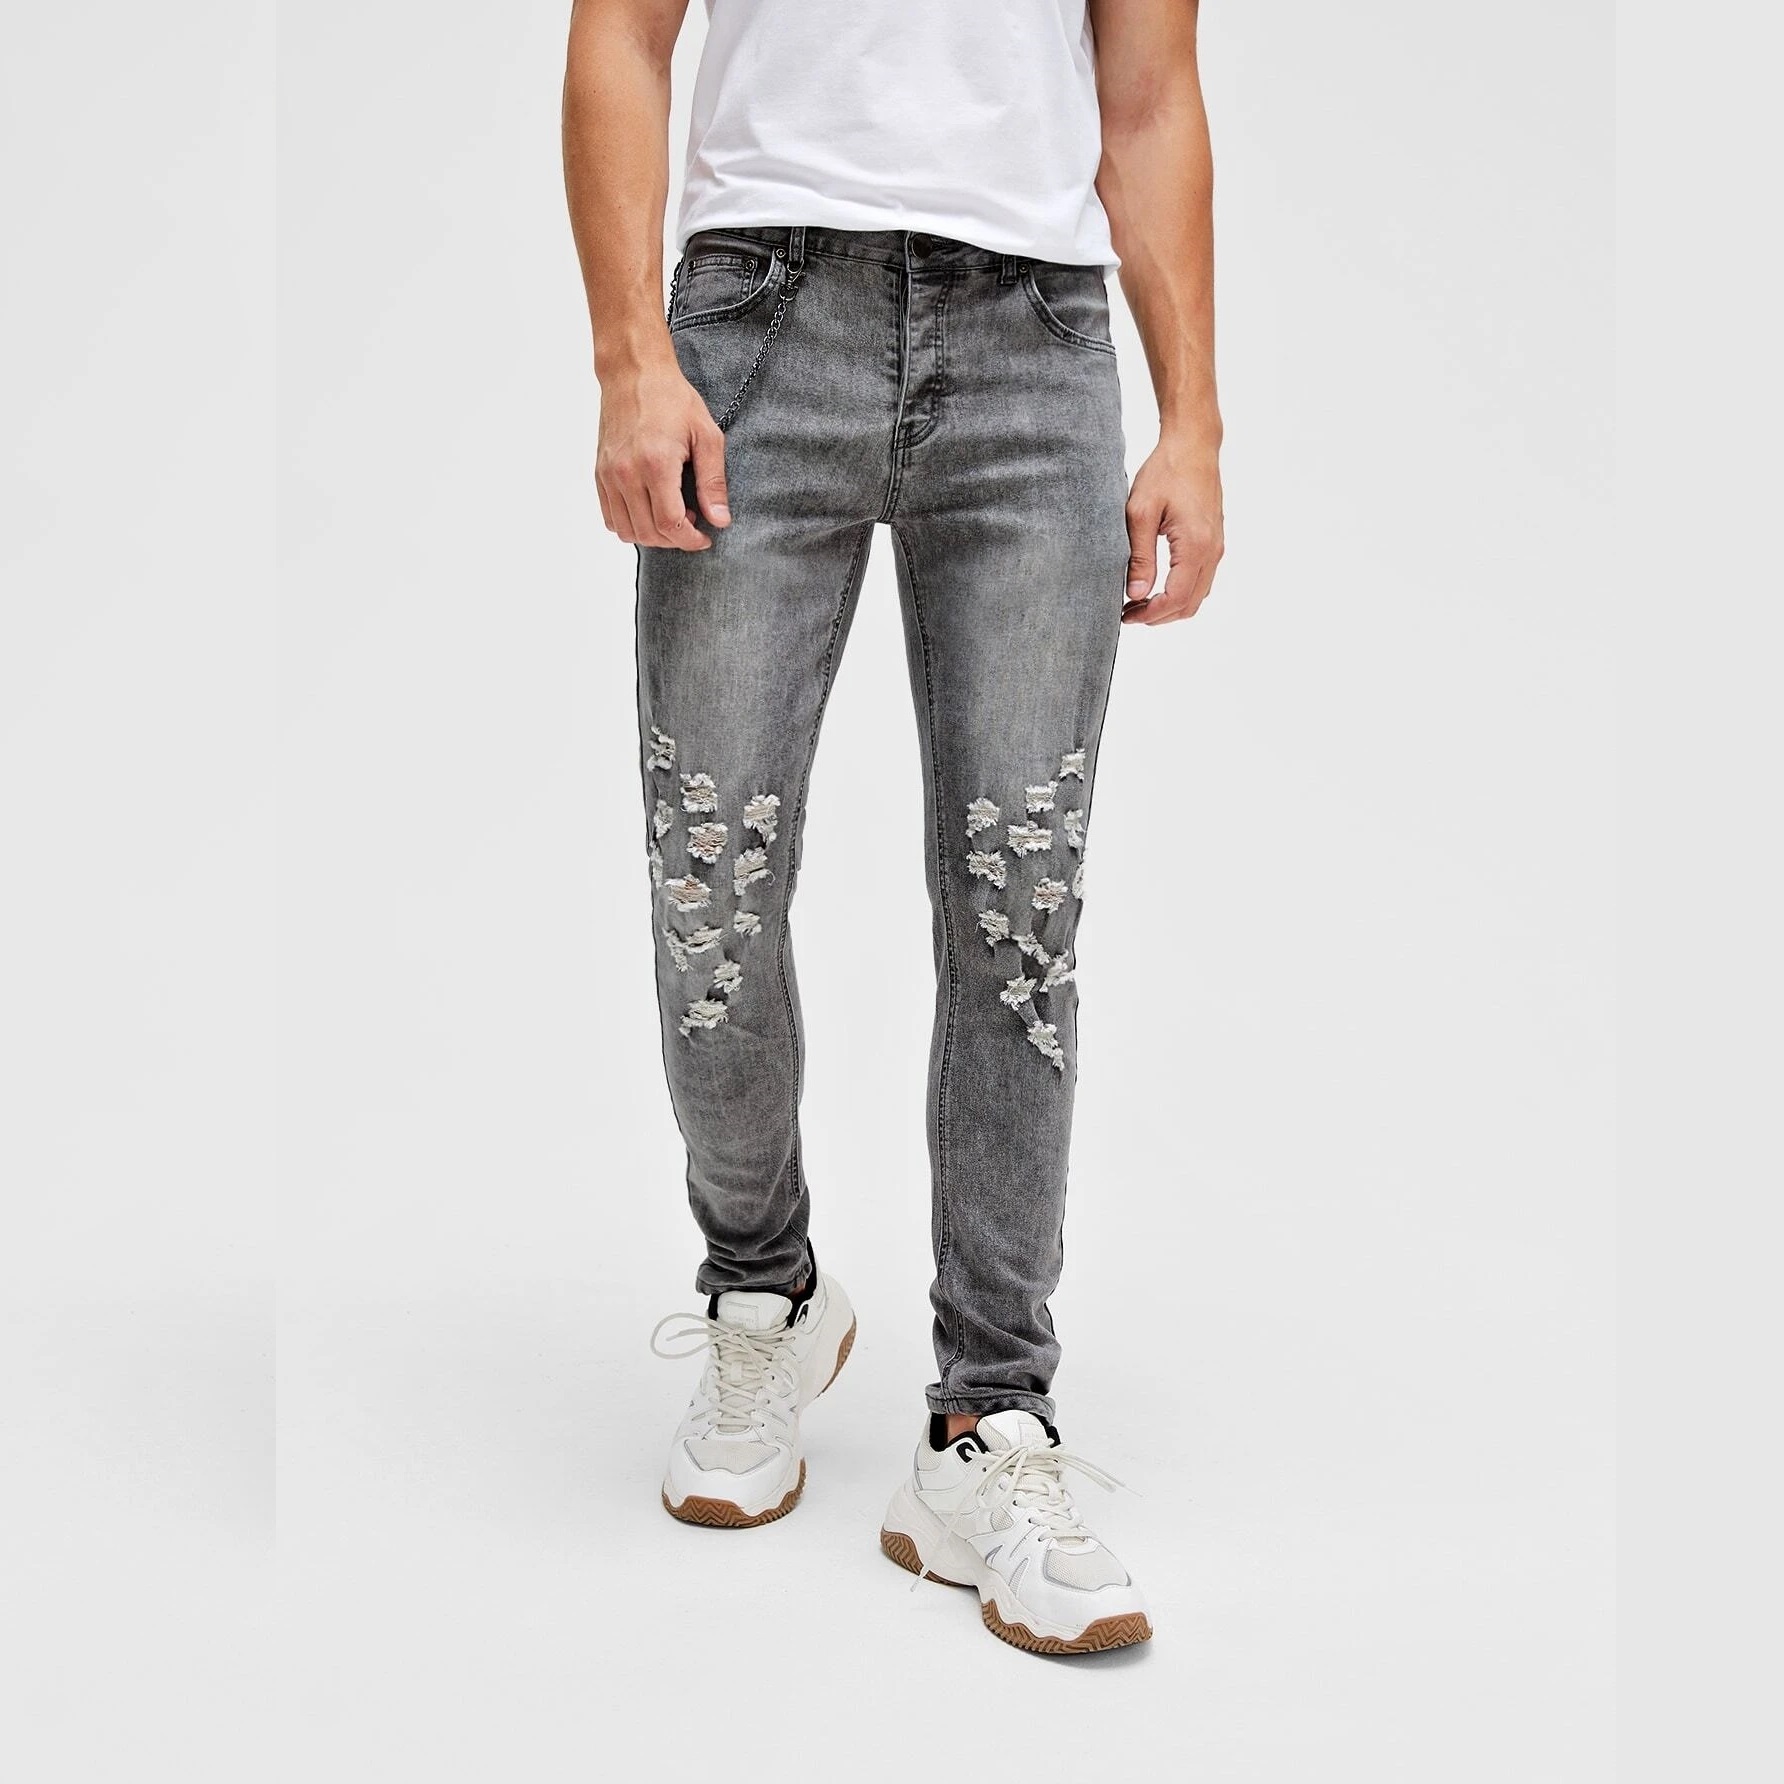 NEW fashion street trend denim Frayed Destroy Pattern Stretch slim gray men jeans